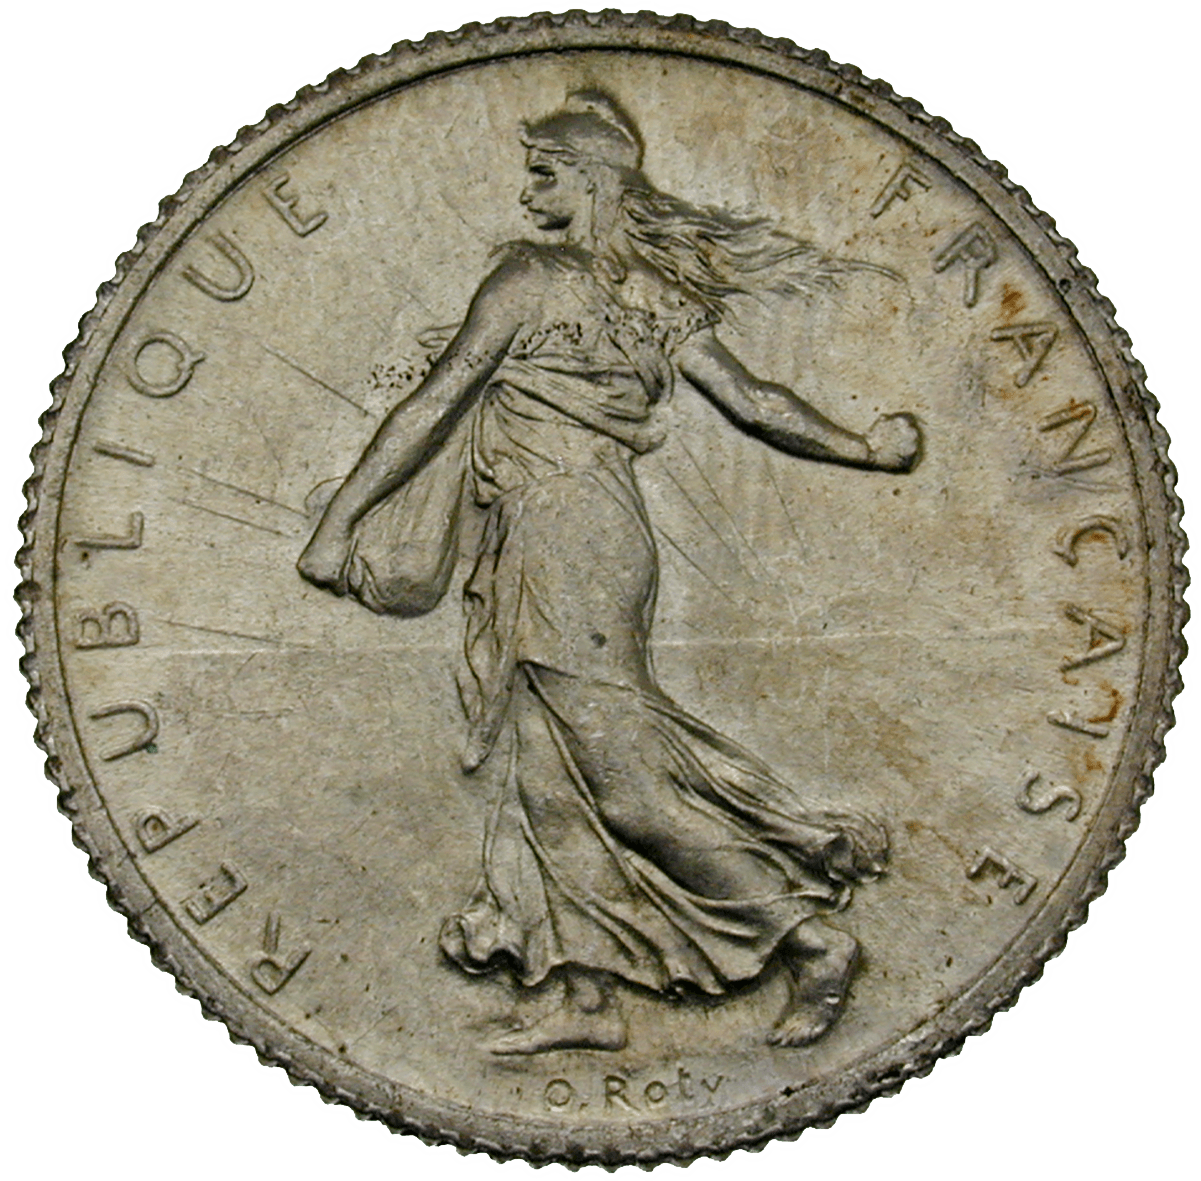 Republic of France, 1 Franc 1915 (obverse)